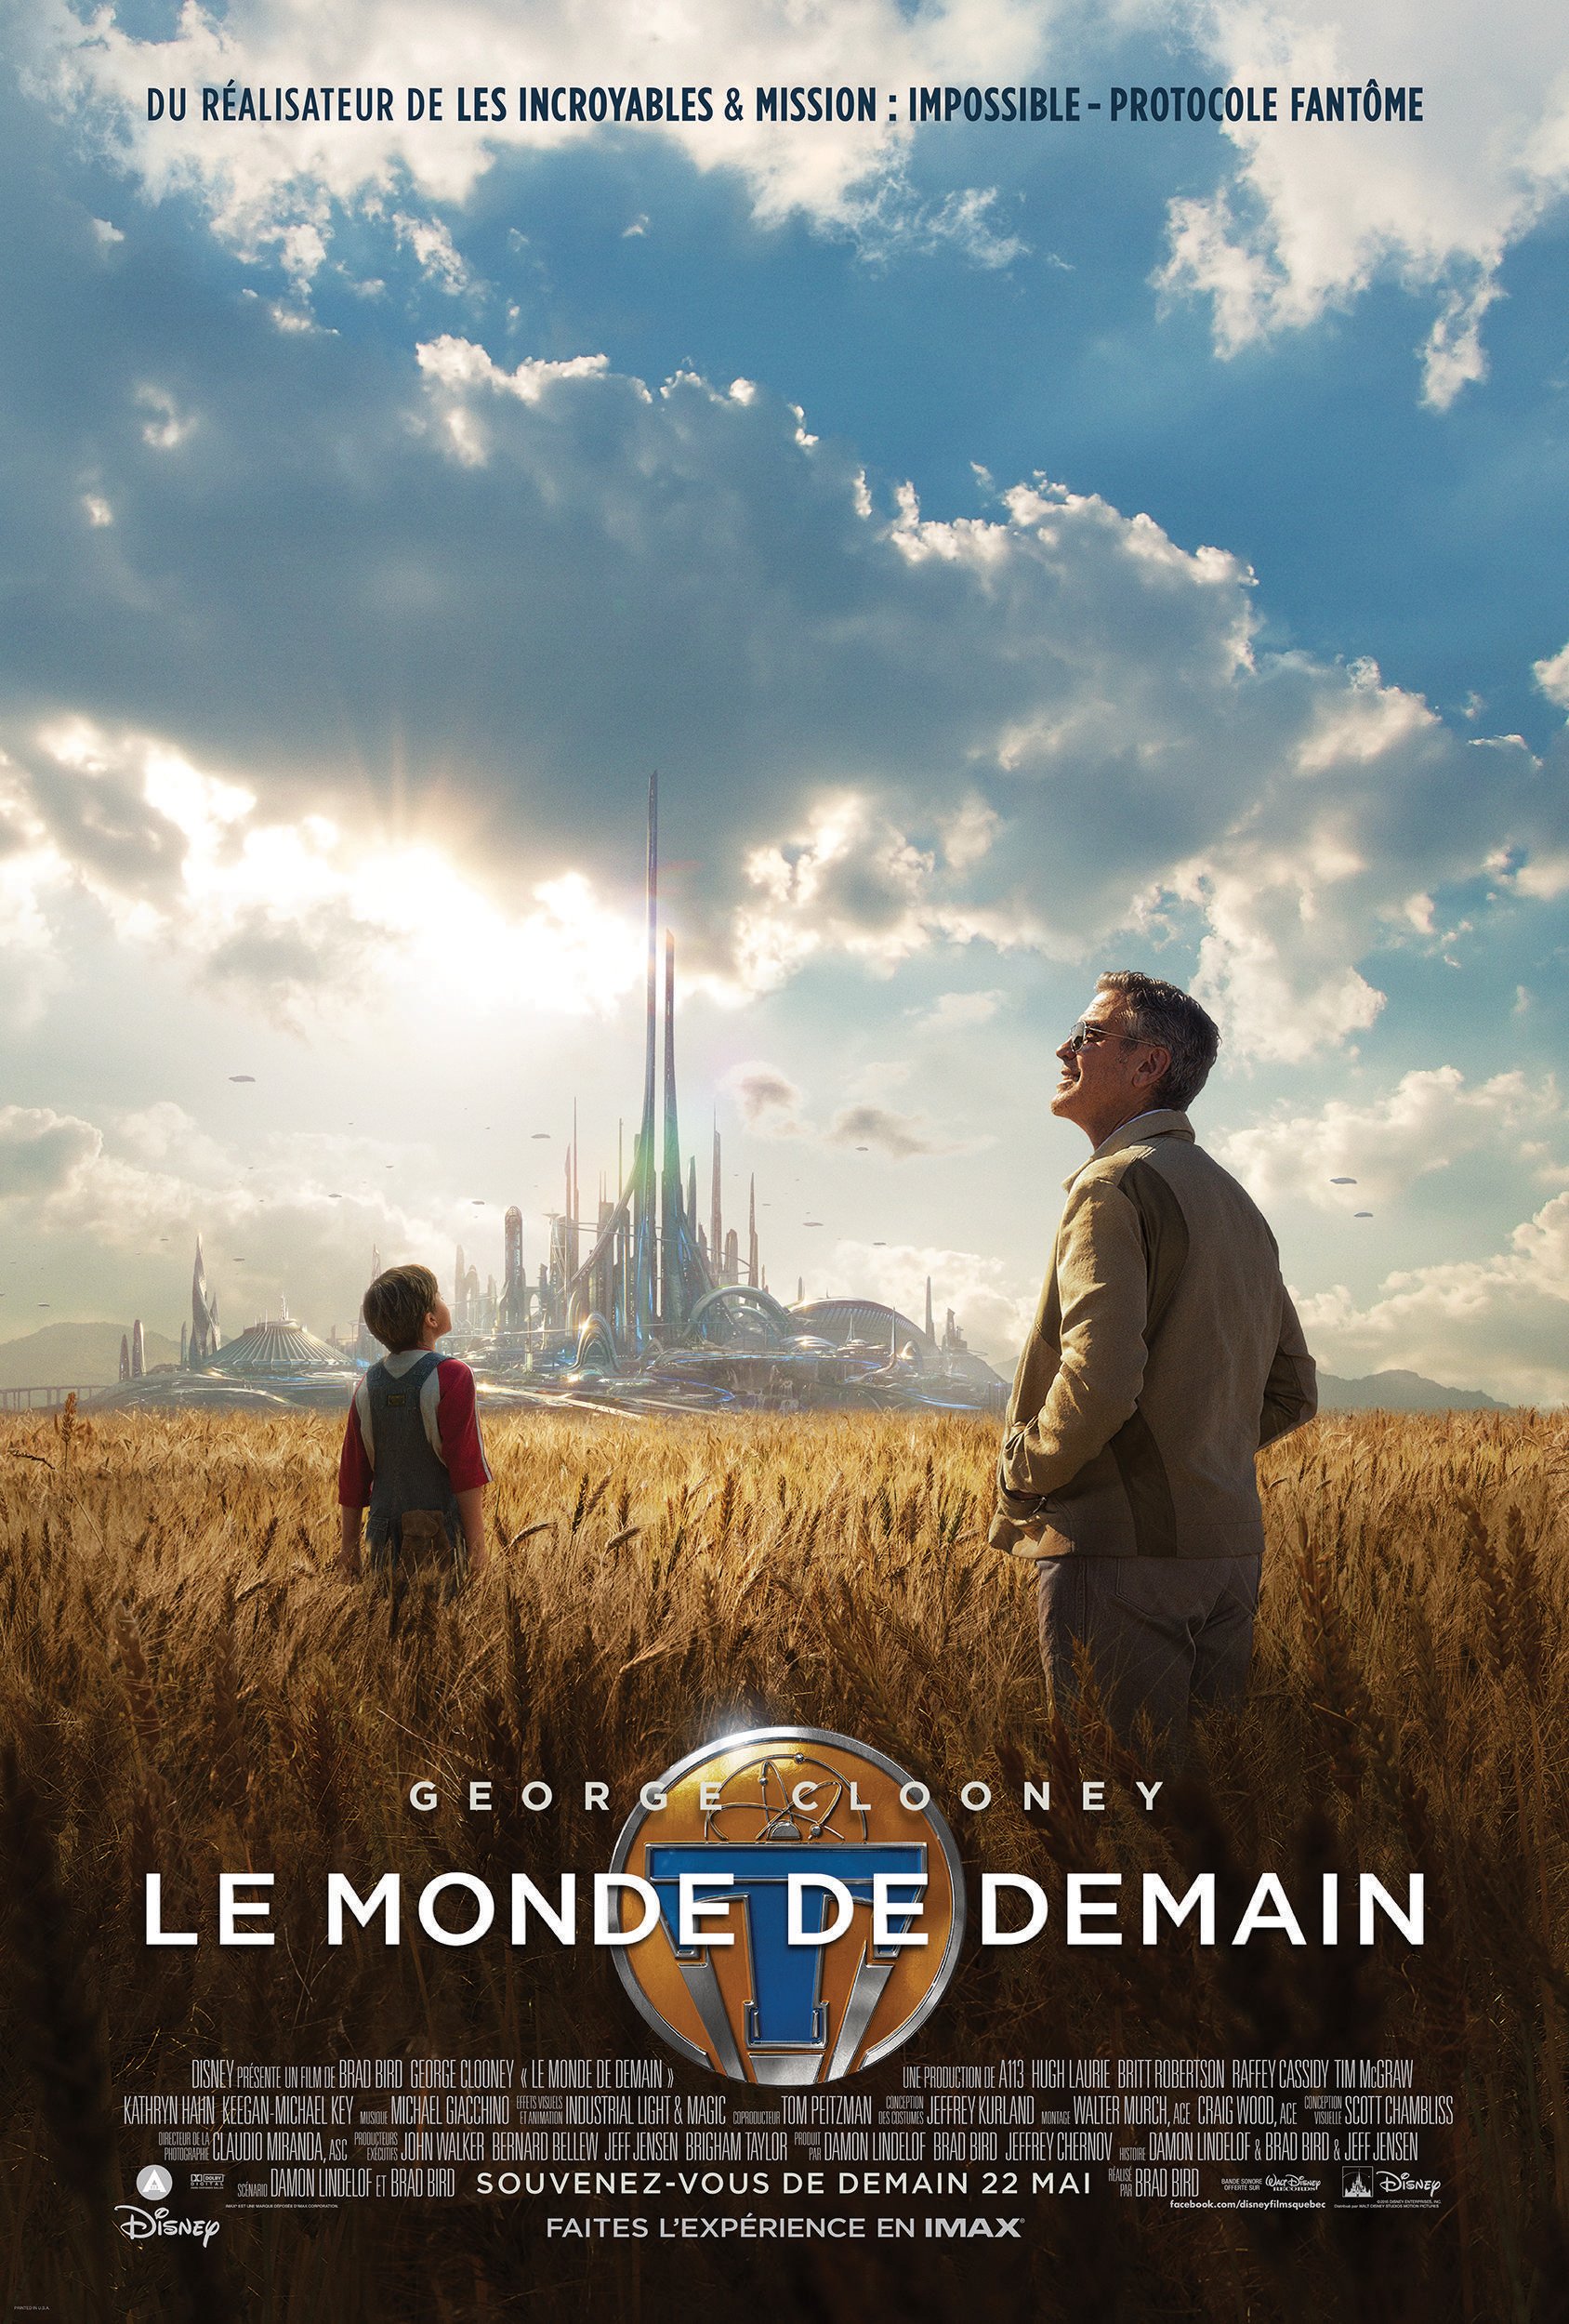 Poster of the movie Le monde de demain